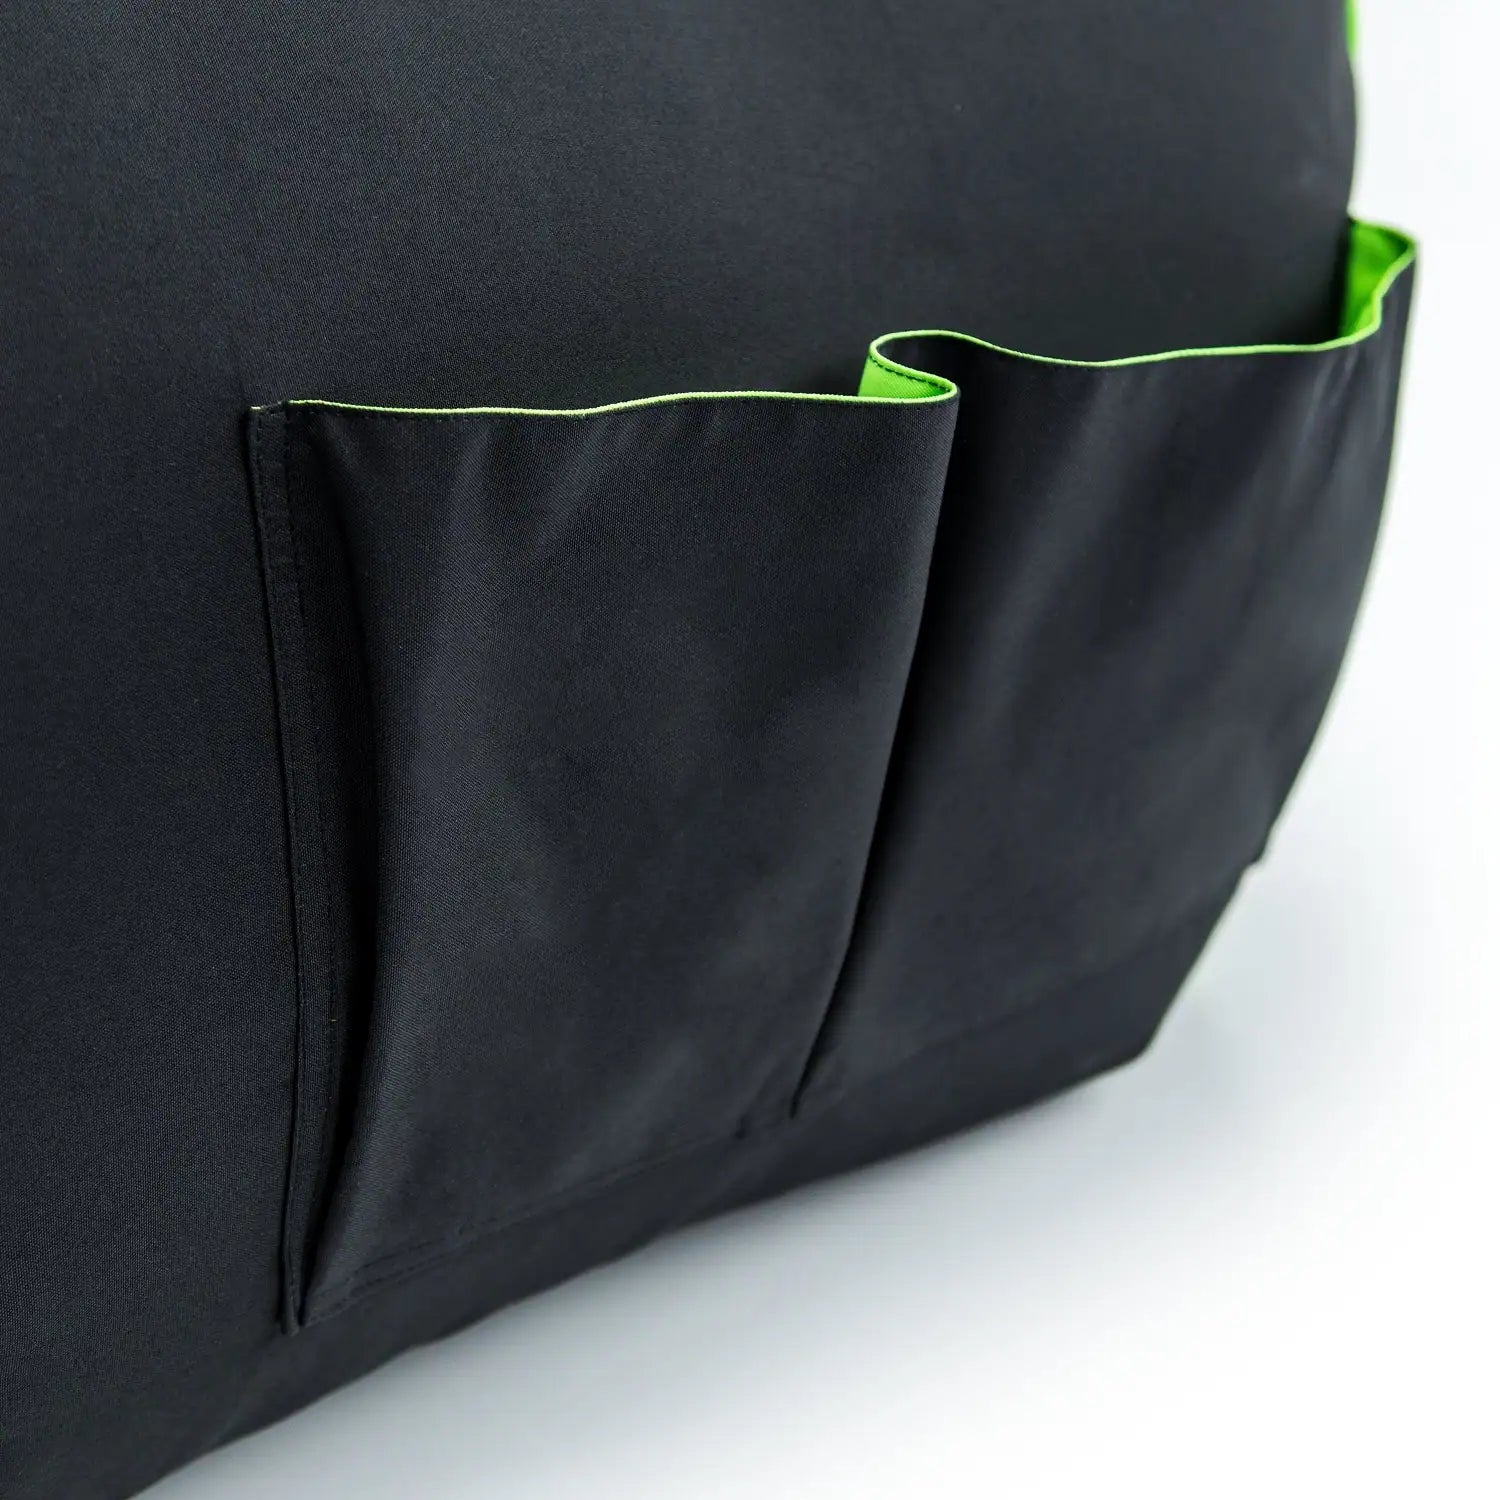 A black bag with a parrot side pocket.